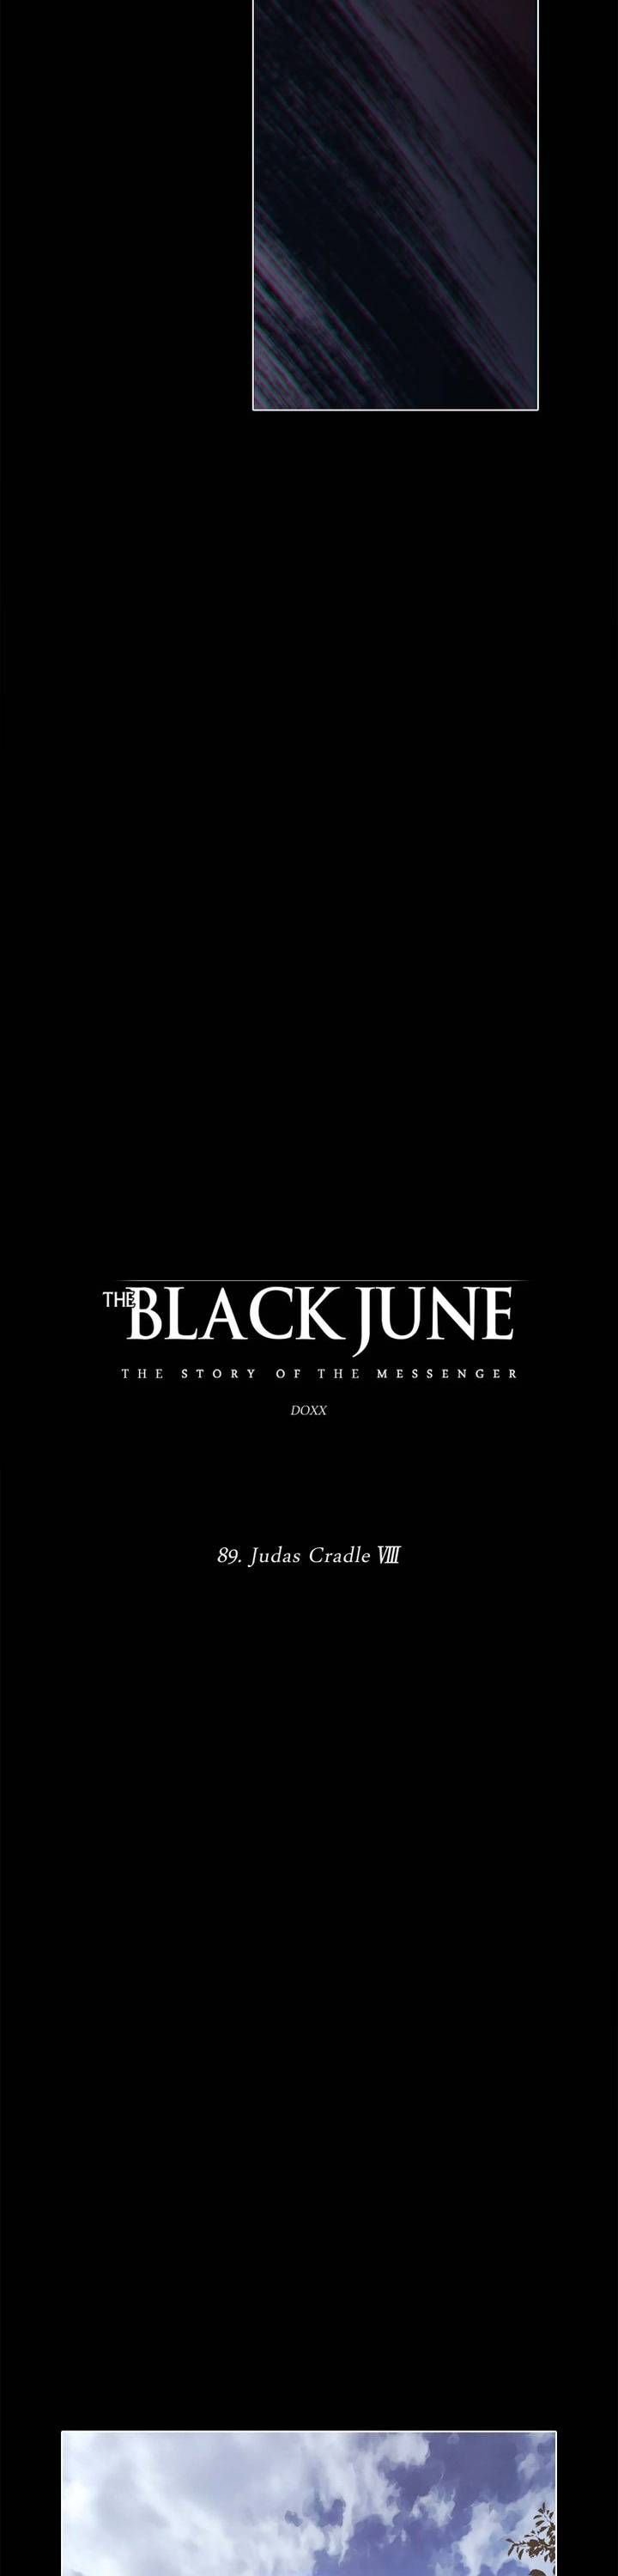 The Black June 89 10